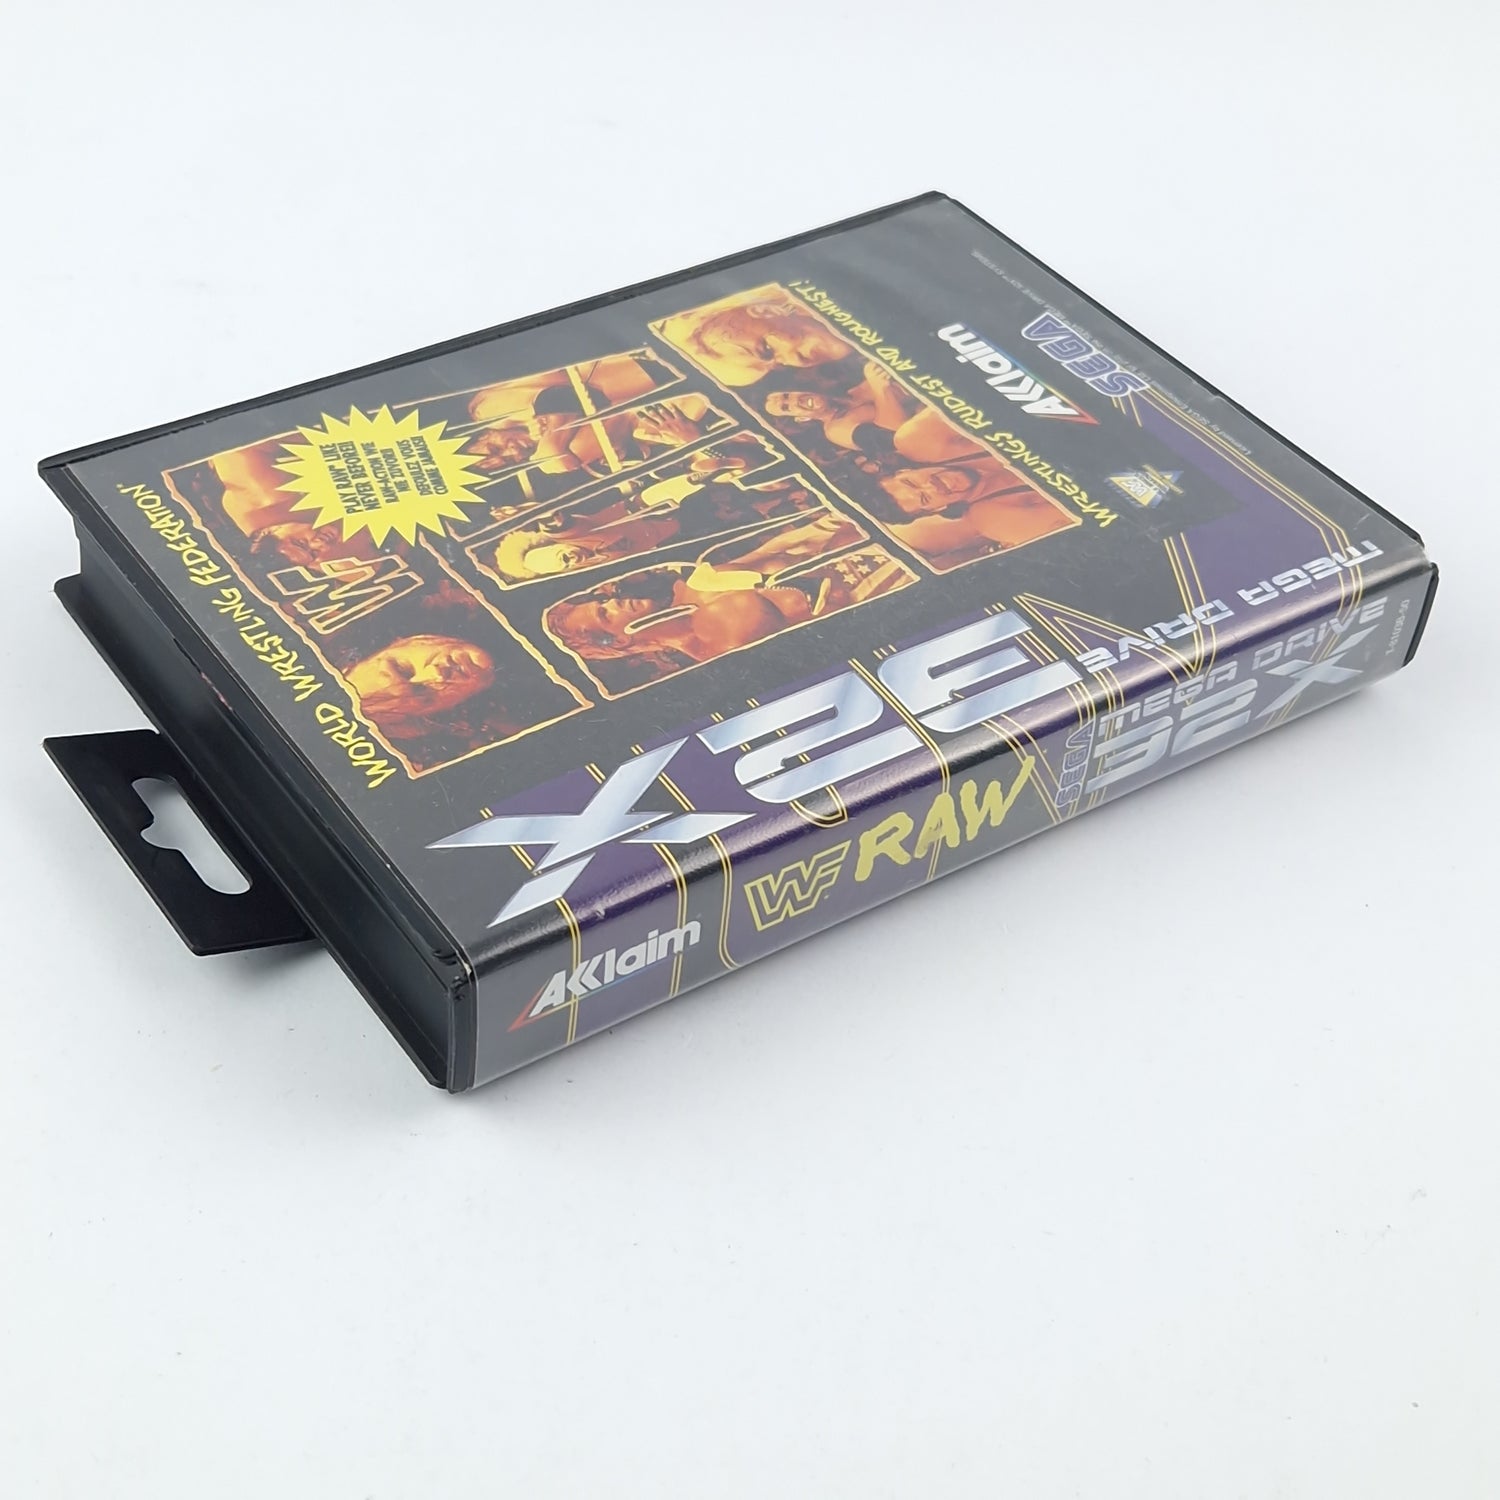 Sega Mega Drive 32X Game: WWF RAW Wrestling - Module Instructions OVP cib / PAL